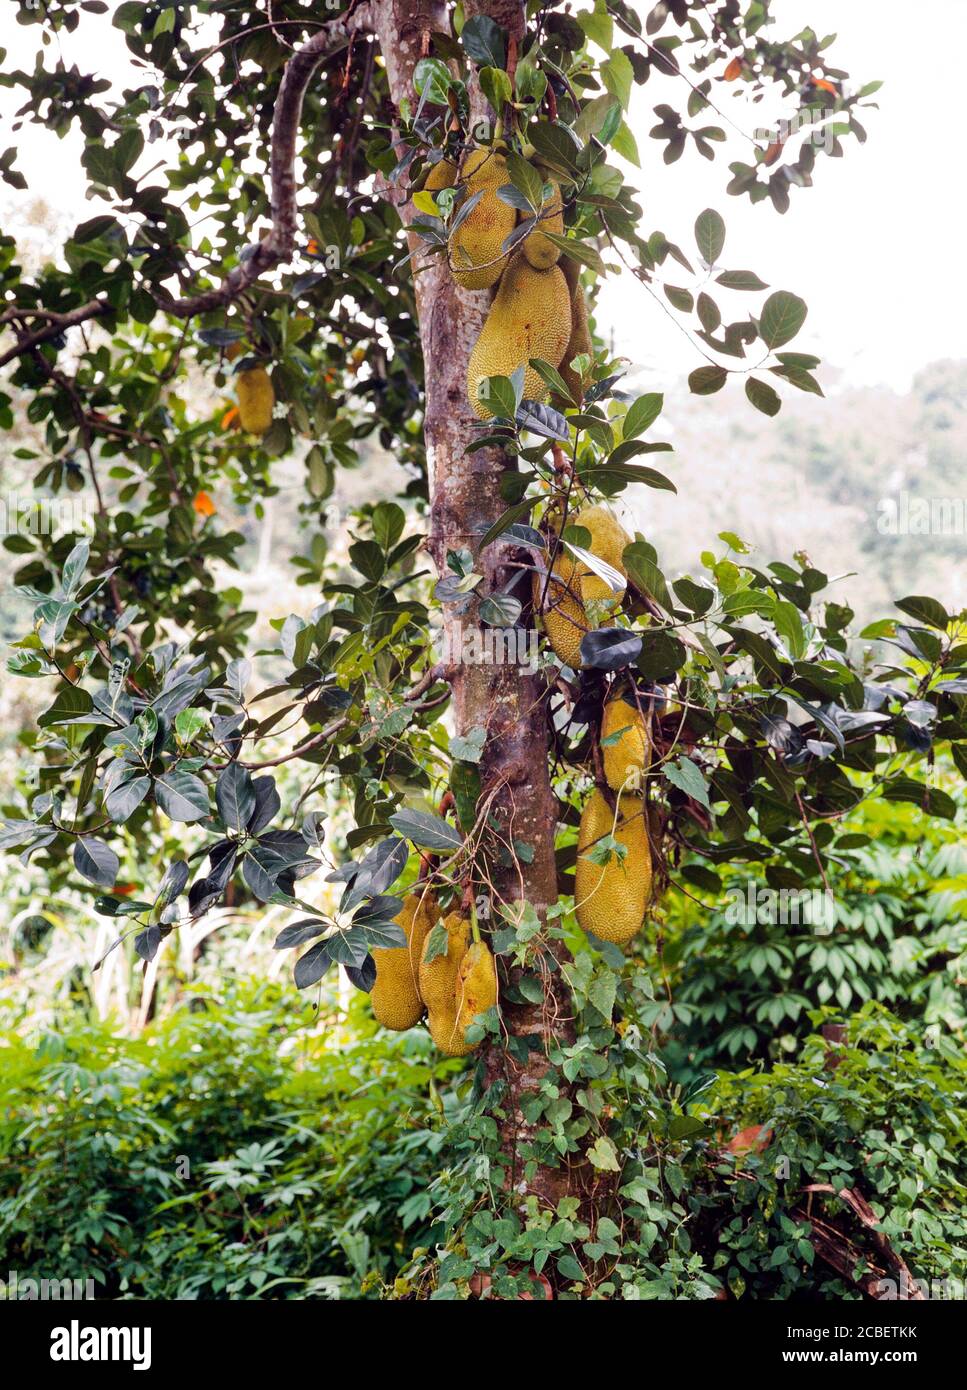 Chempedak fruit (Malay) Artocarpus integer, growing on tree, Cempedak is similar to jackfruit in many ways, however, cempedak are smaller, Malaysia. Stock Photo